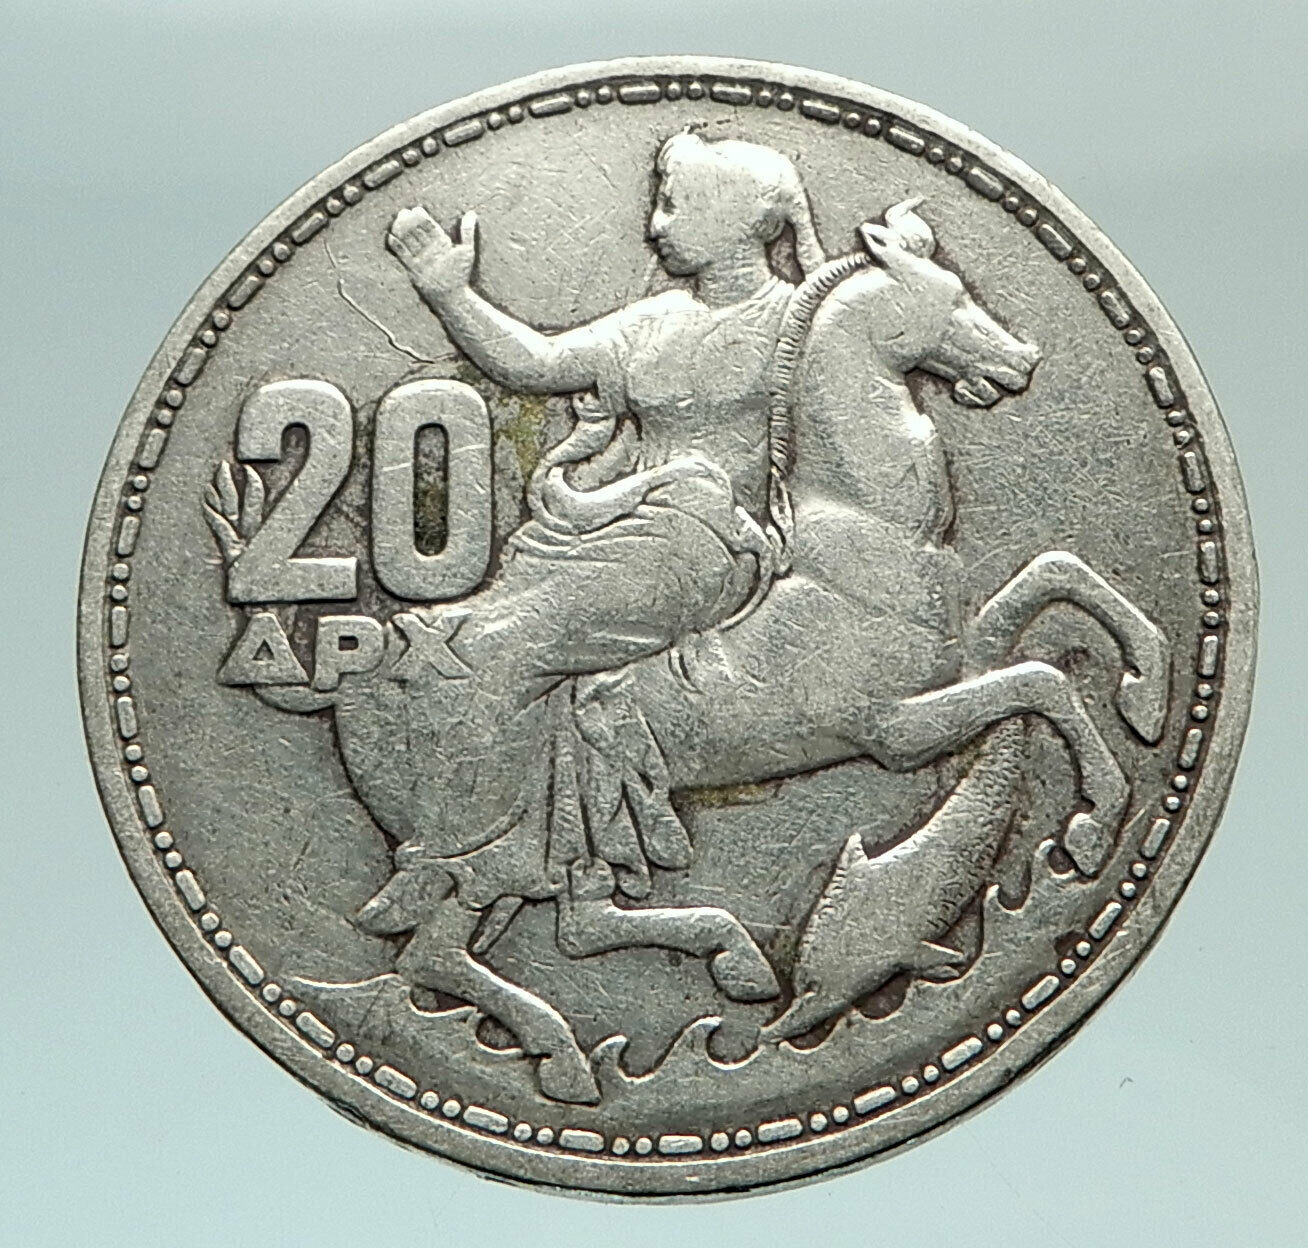 1960 GREECE King PAUL I Silver 20 Drachmai Coin SELENE DIANA MOON GODDESS i76981